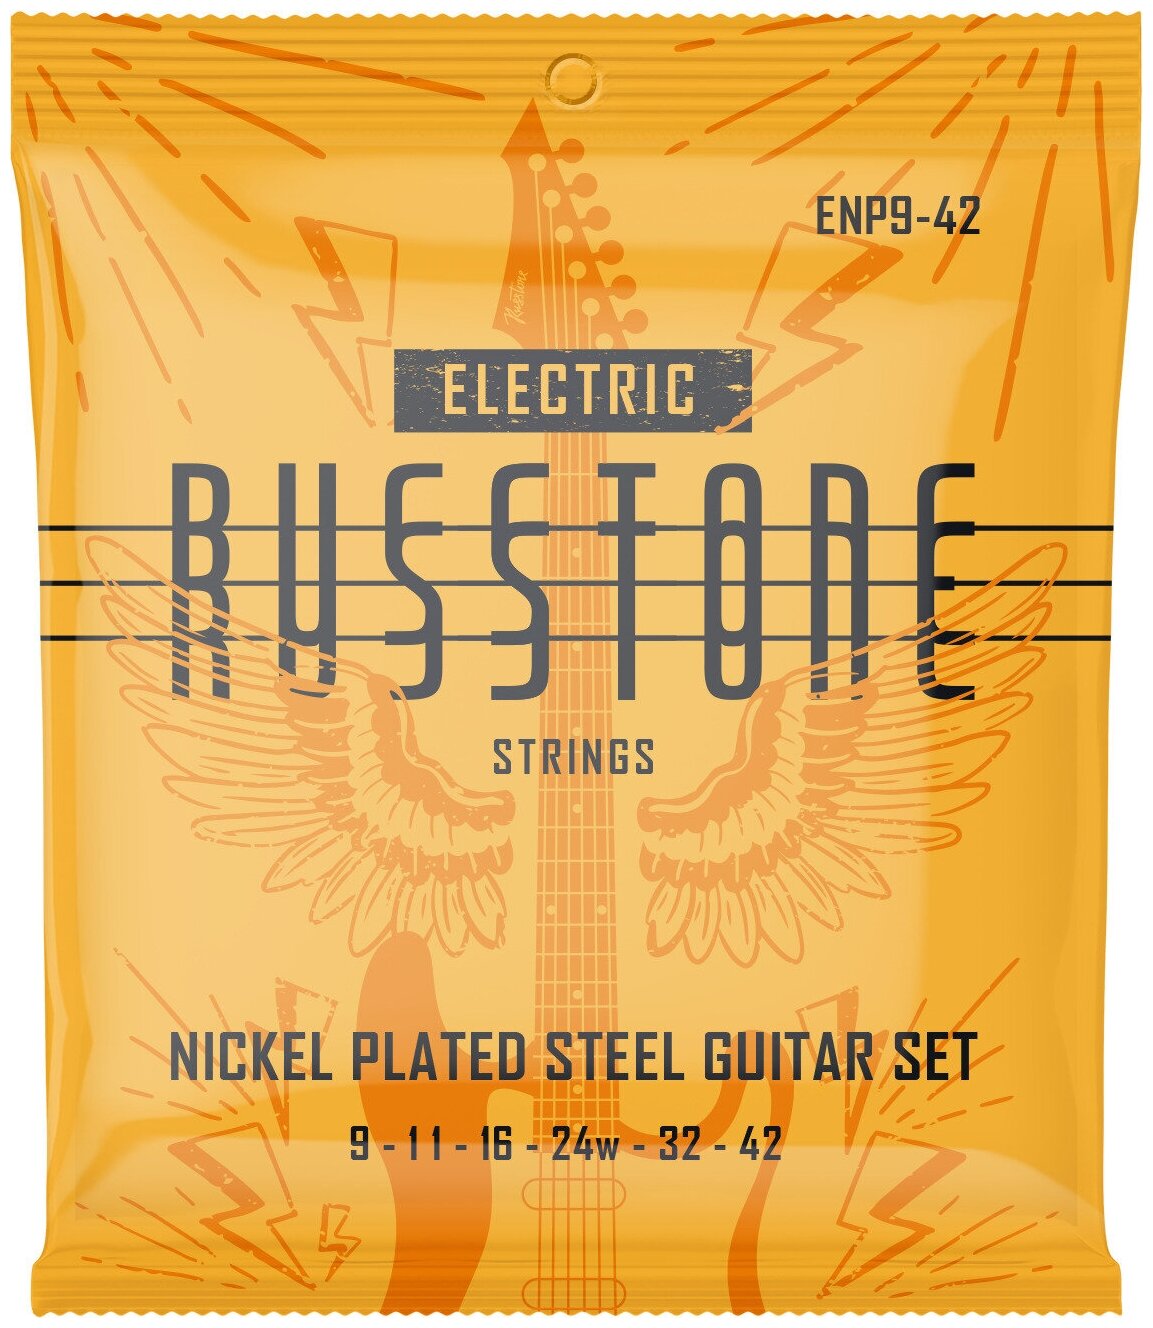 Russtone ENP9-42 - Струны для электрогитары Nickel Plated (9-11-16-24w-32-42)